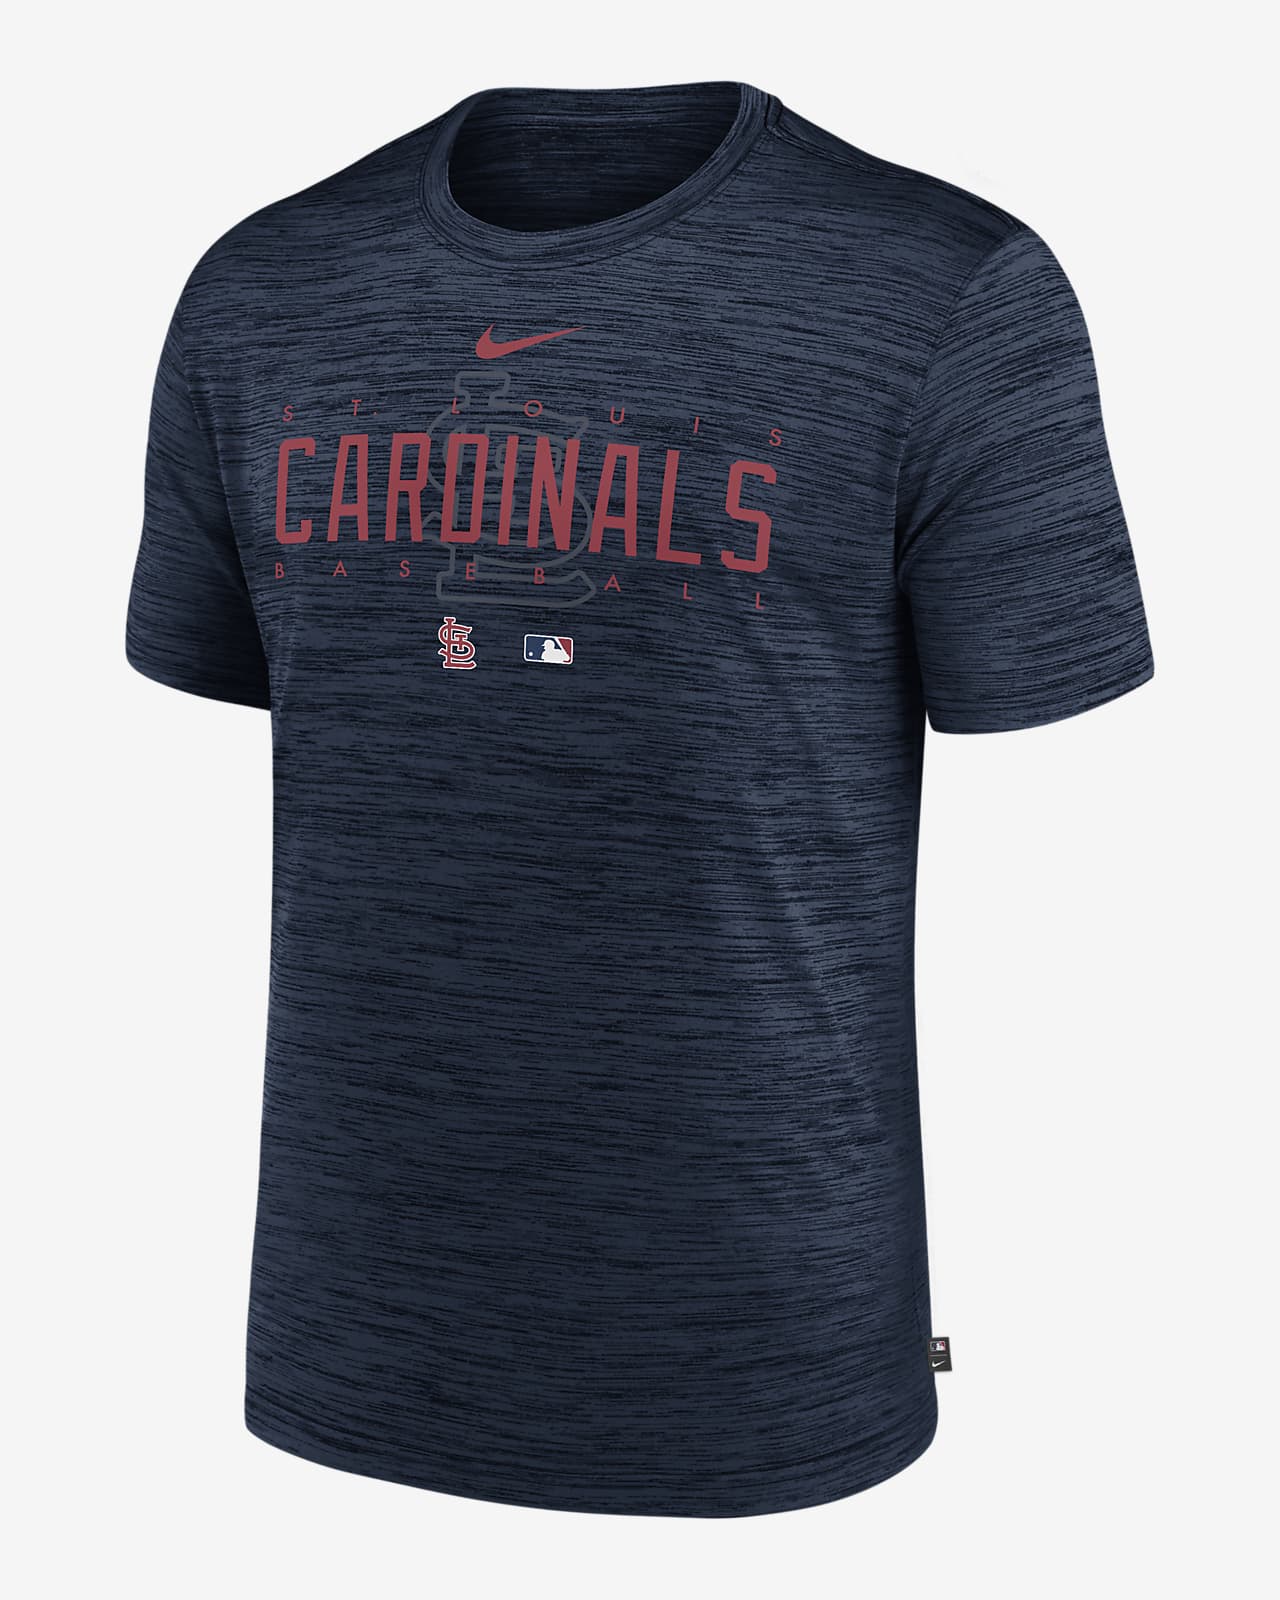 Nike Dri-FIT Velocity Practice (MLB St. Louis Cardinals) Men's T-Shirt